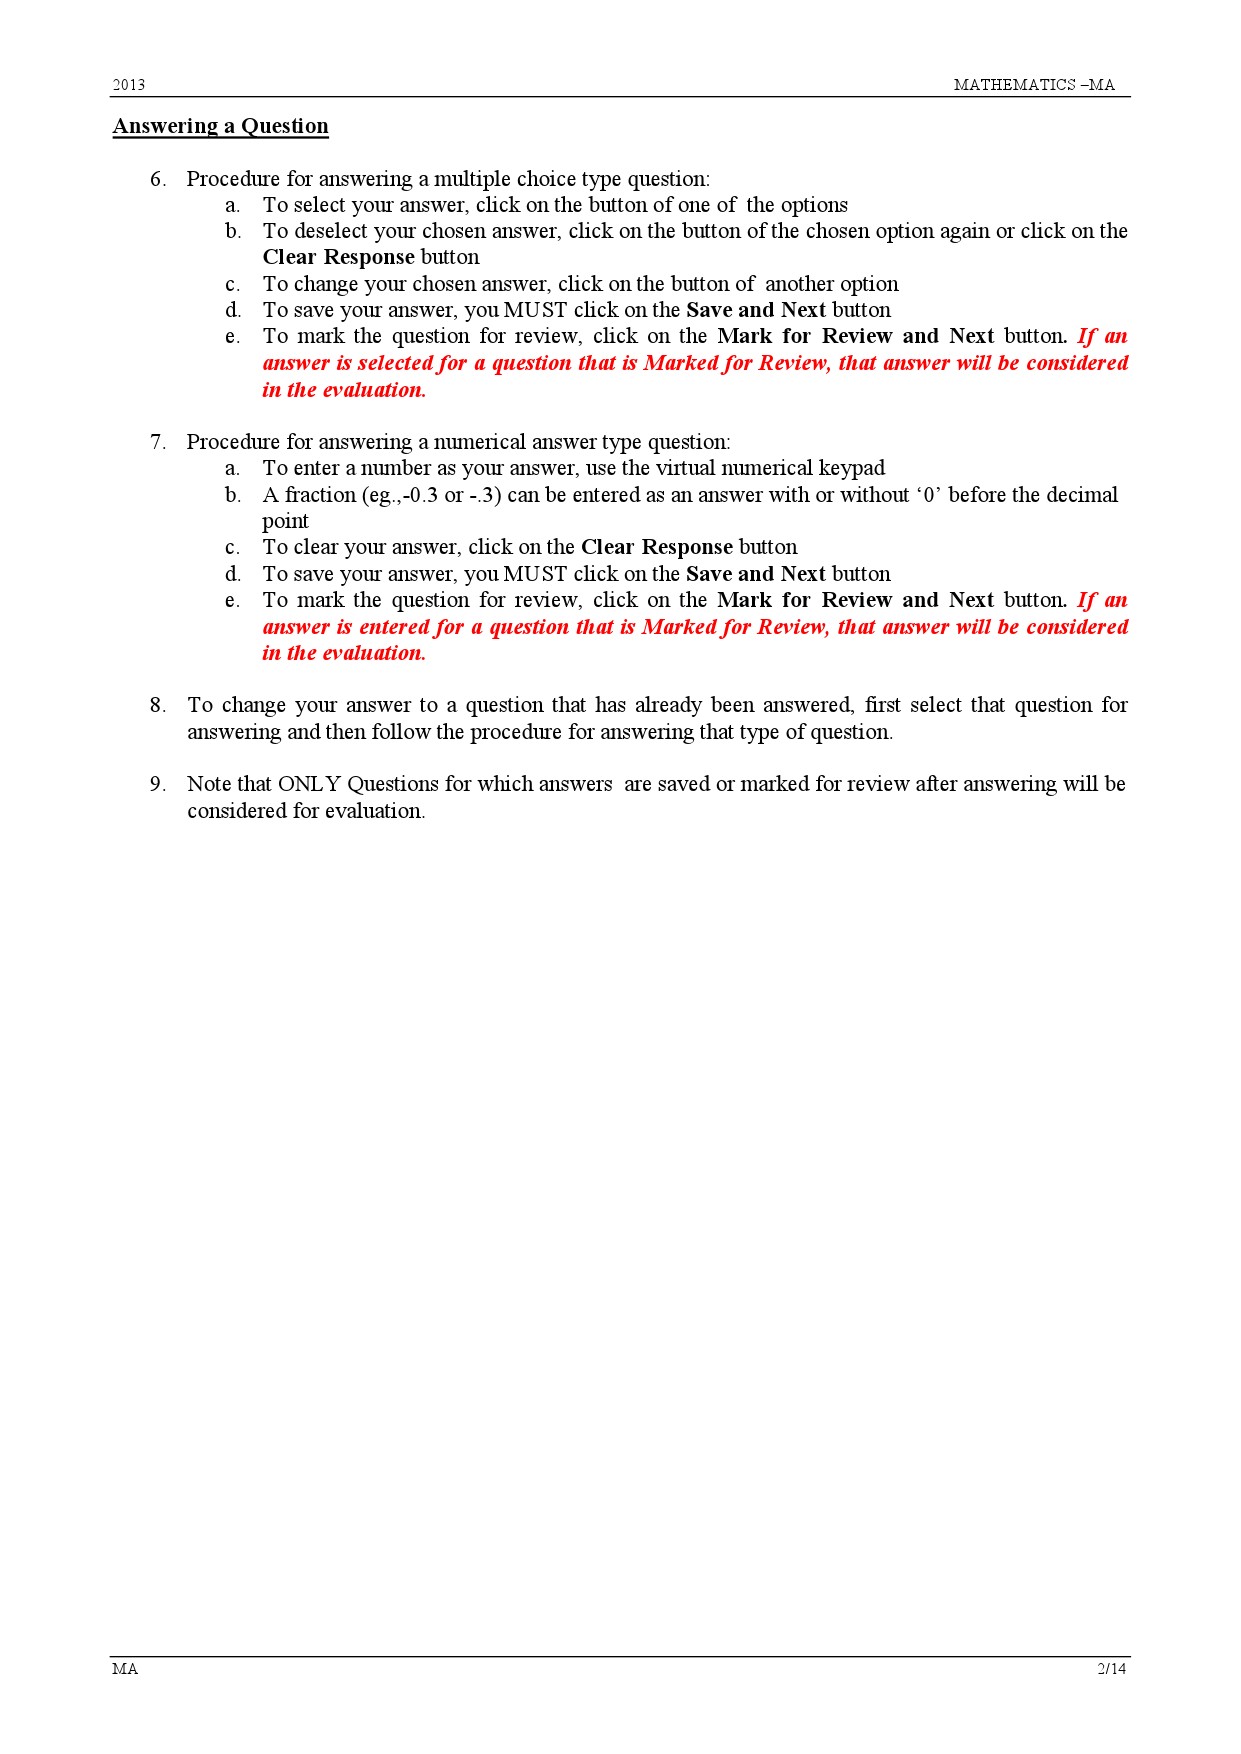 GATE Exam Question Paper 2013 Mathematics 2